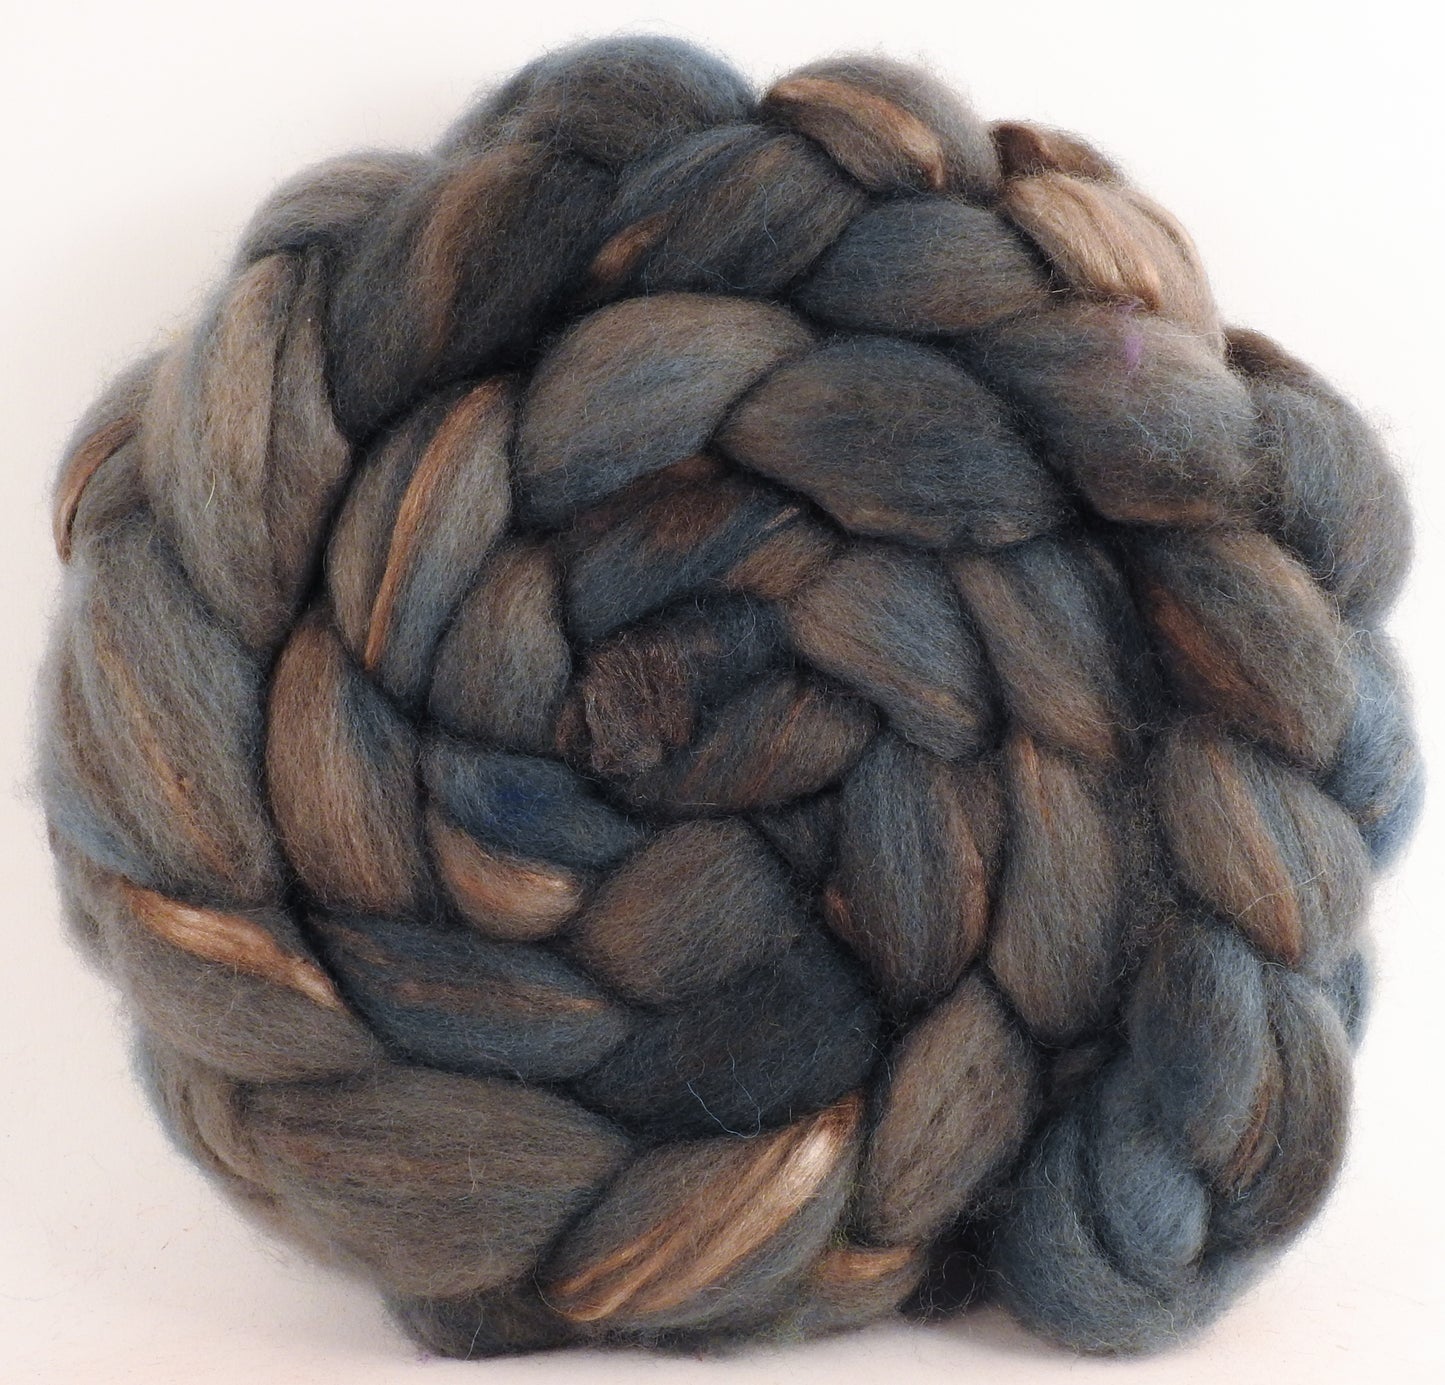 Blue-faced Leicester/ Tussah Silk (70/30) - Smoke - (5.8 oz.)